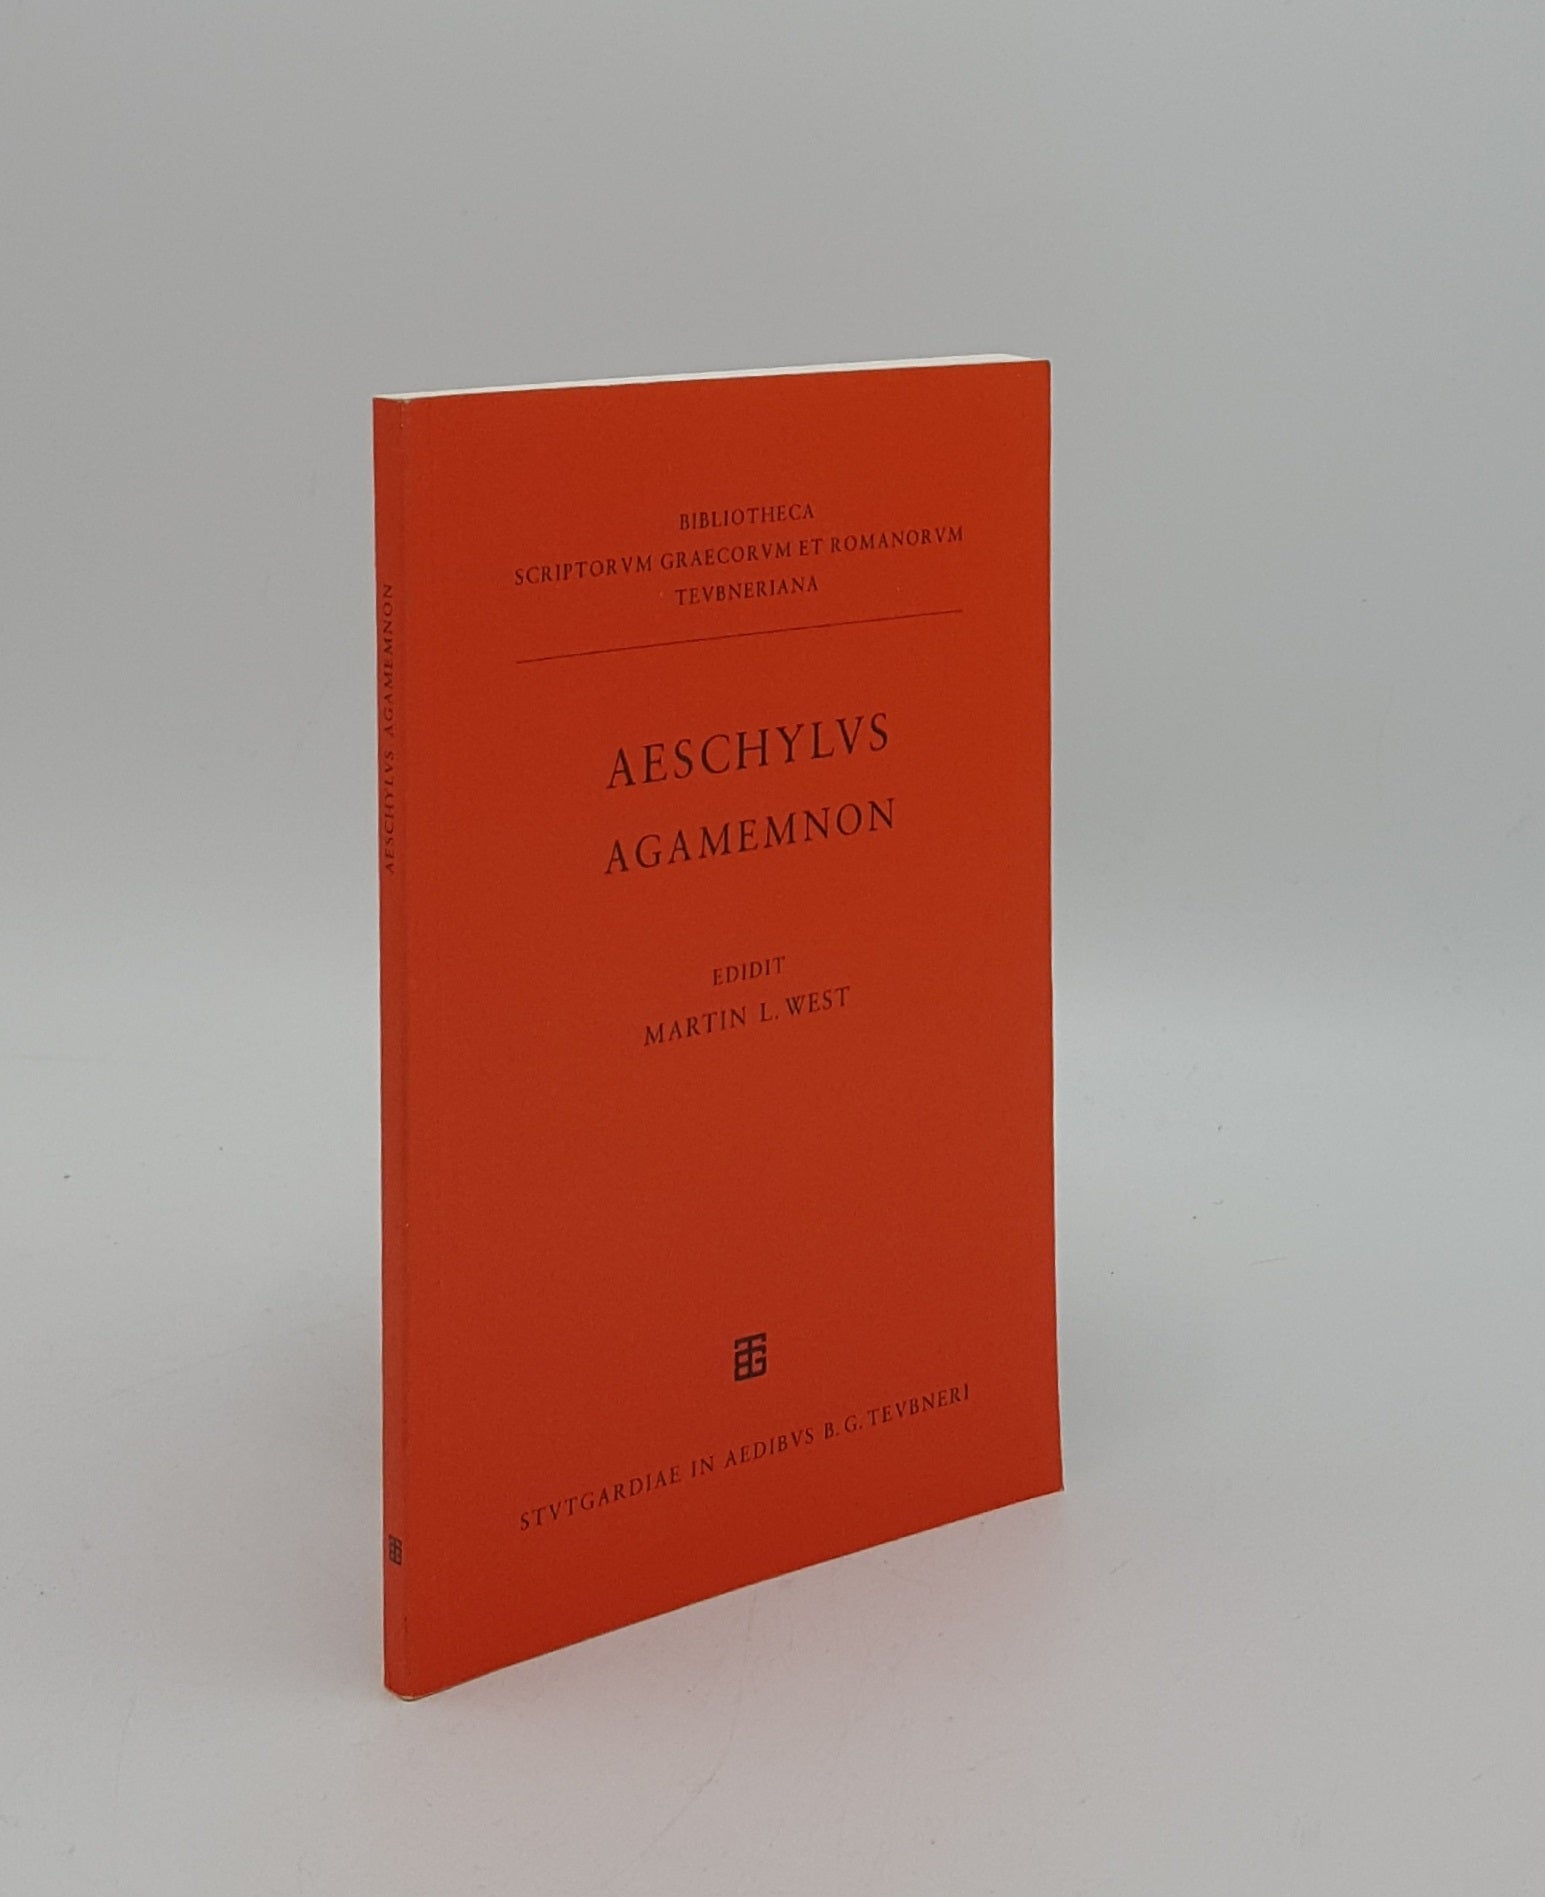 AESCHYLUS, WEST Martin L. - Aeschylus Agamemnon (Bibliotheca Scriptorum Graecorum Et Romanorum Teubneriana)